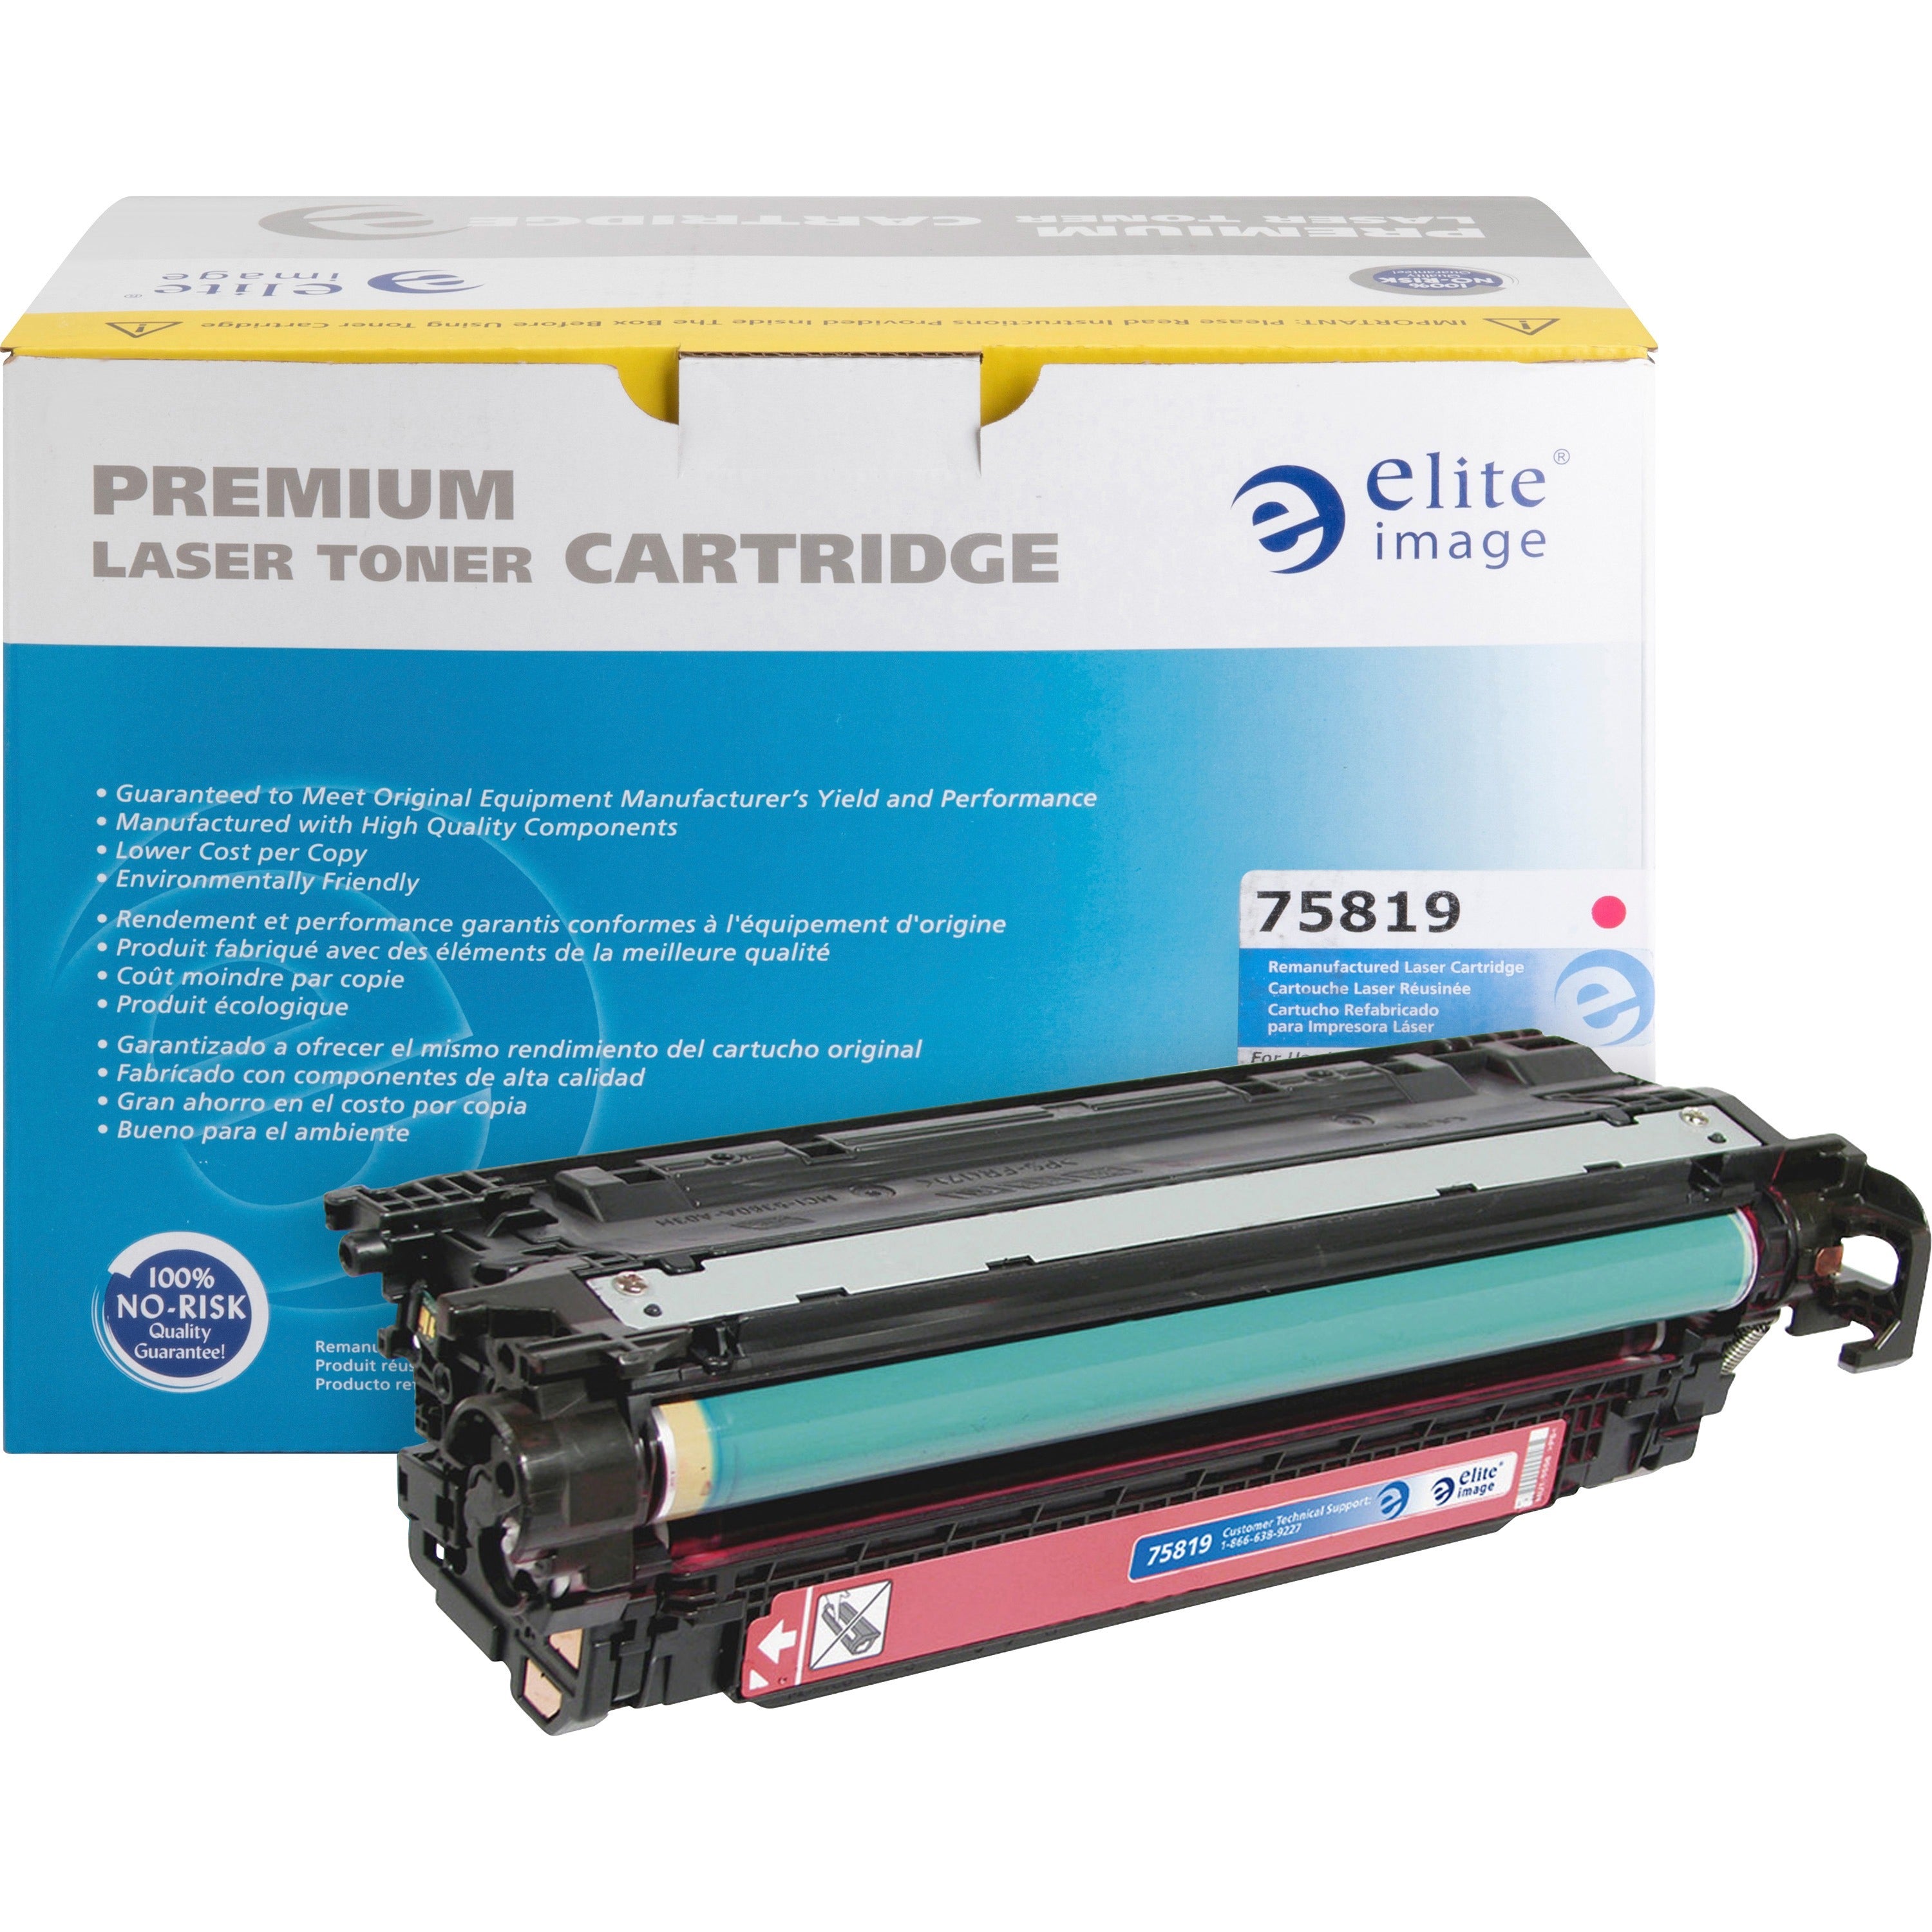 Elite Image Remanufactured Laser Toner Cartridge - Alternative for HP 507A (CE403A) - Magenta - 1 Each - 6000 Pages - 1